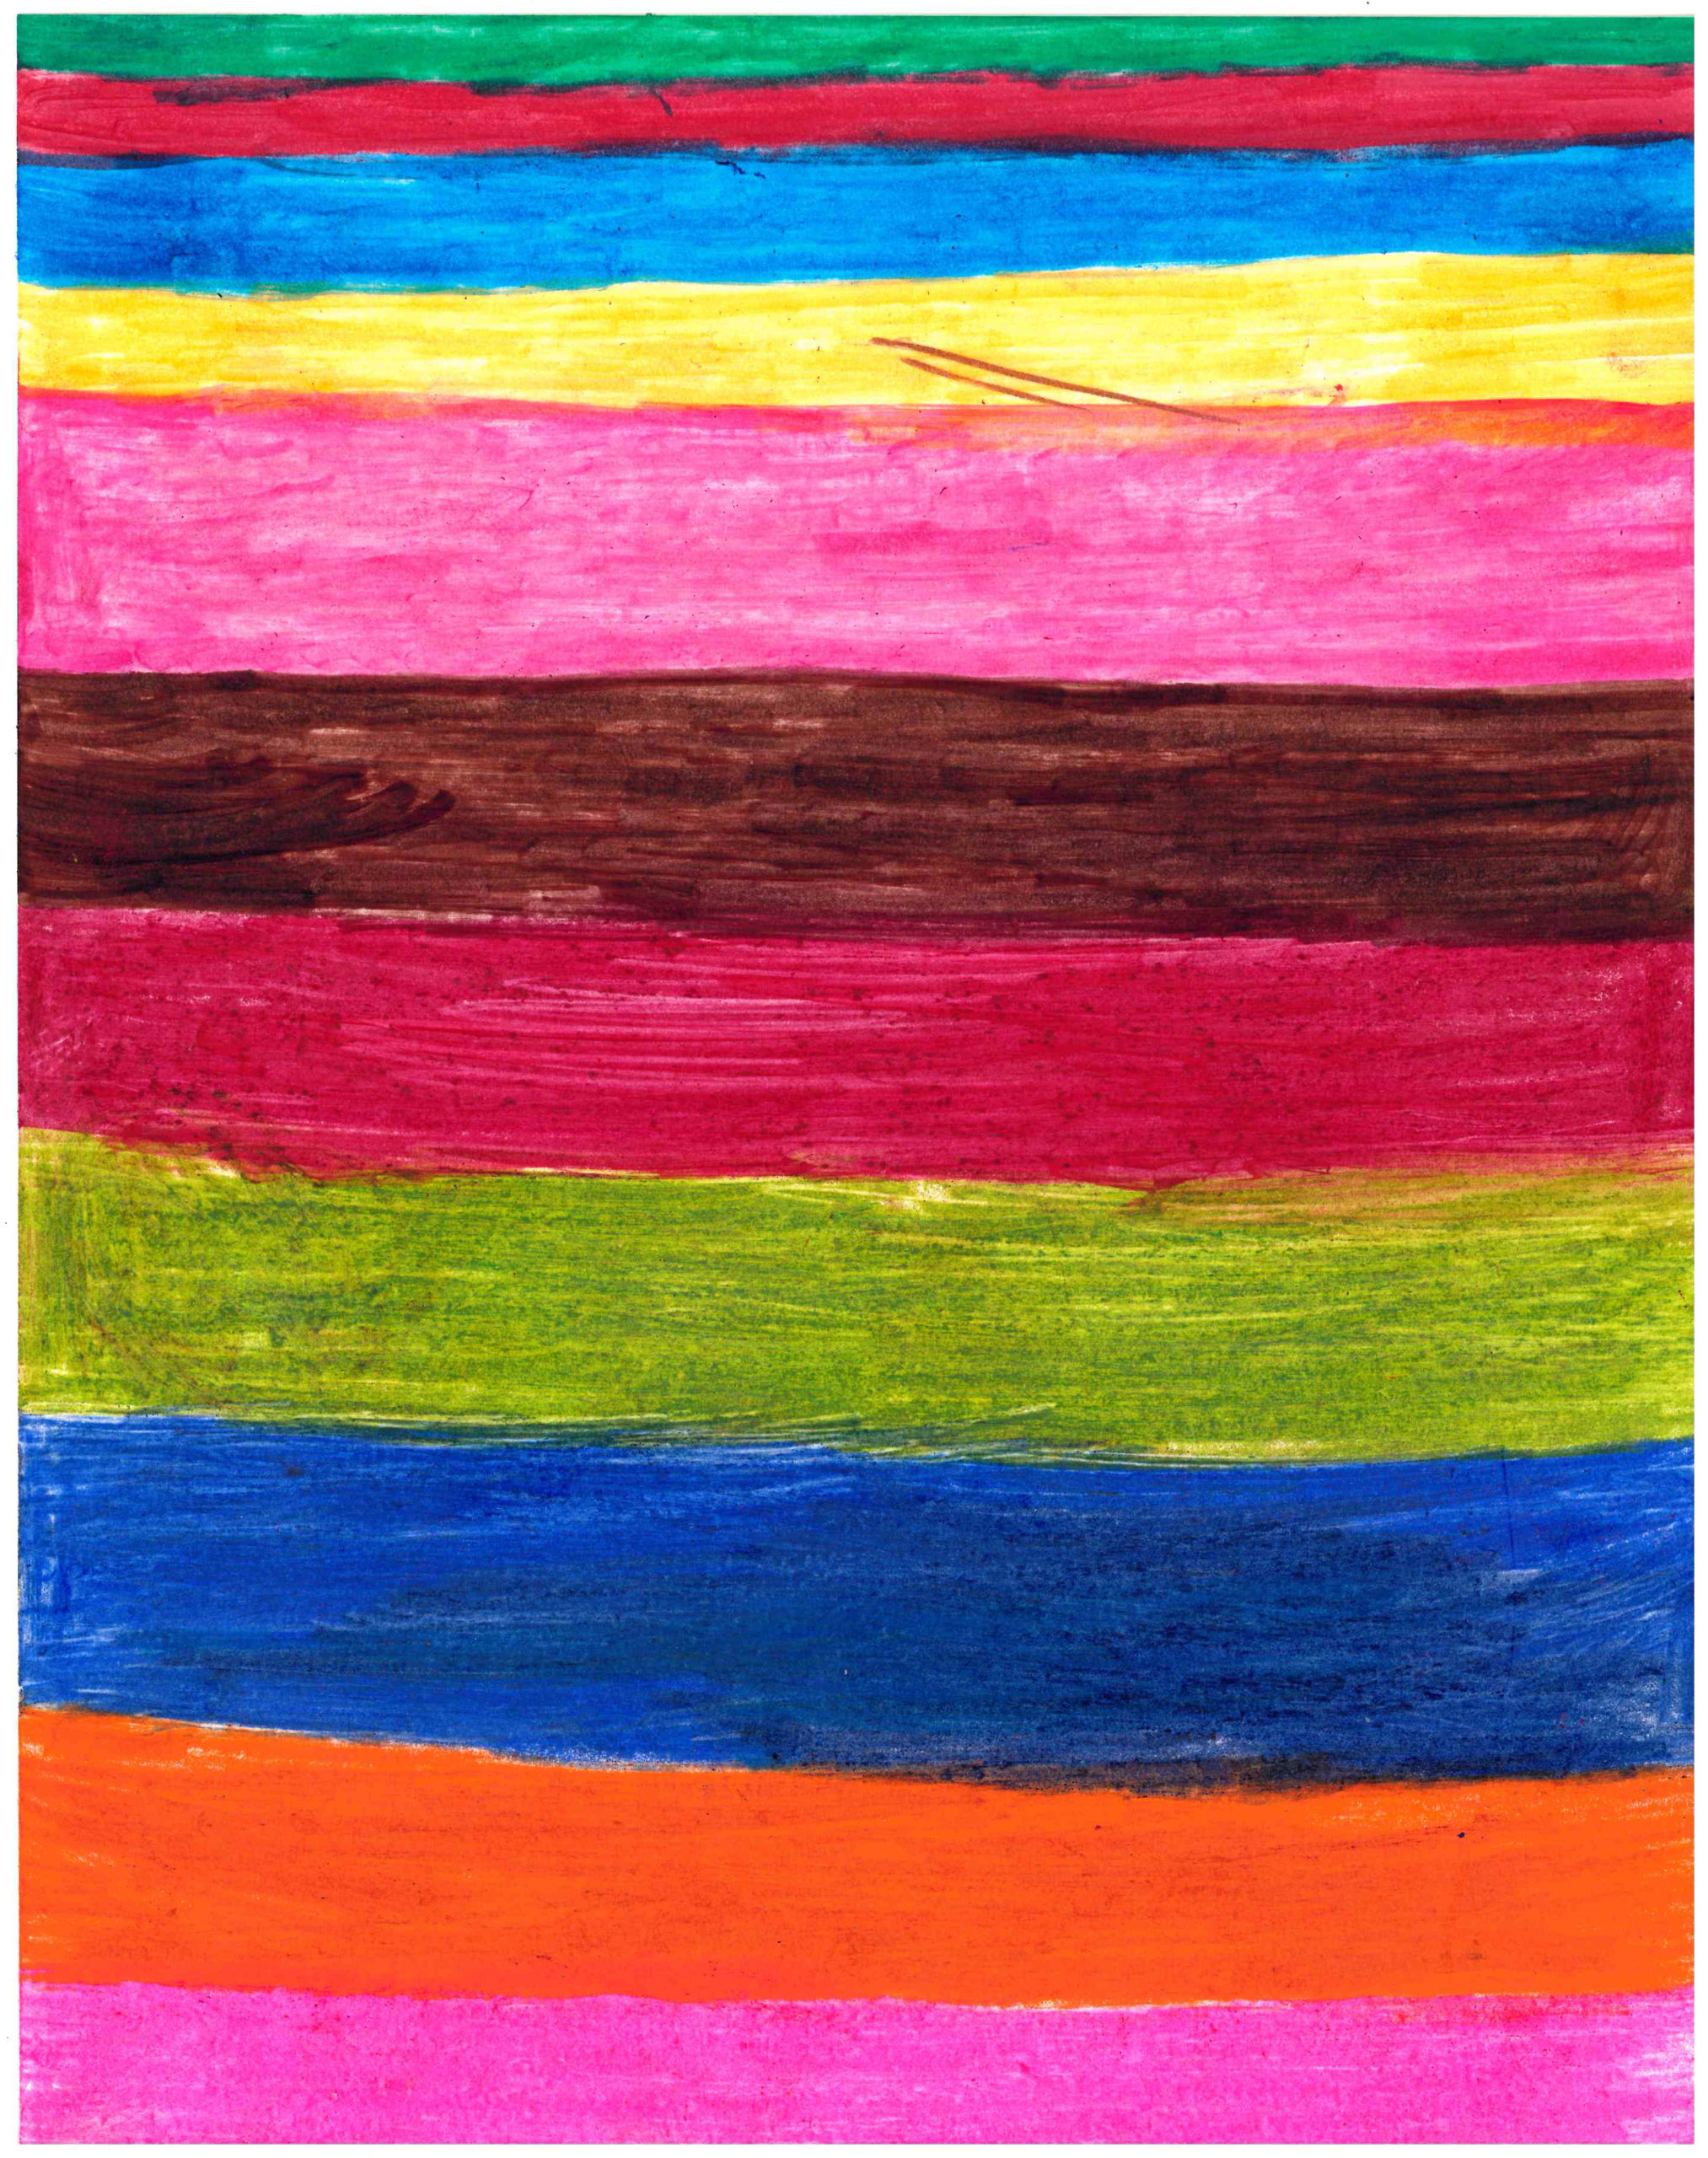 Rotimi Osinubi. Stripes. Colored pencil on paper. 2019.